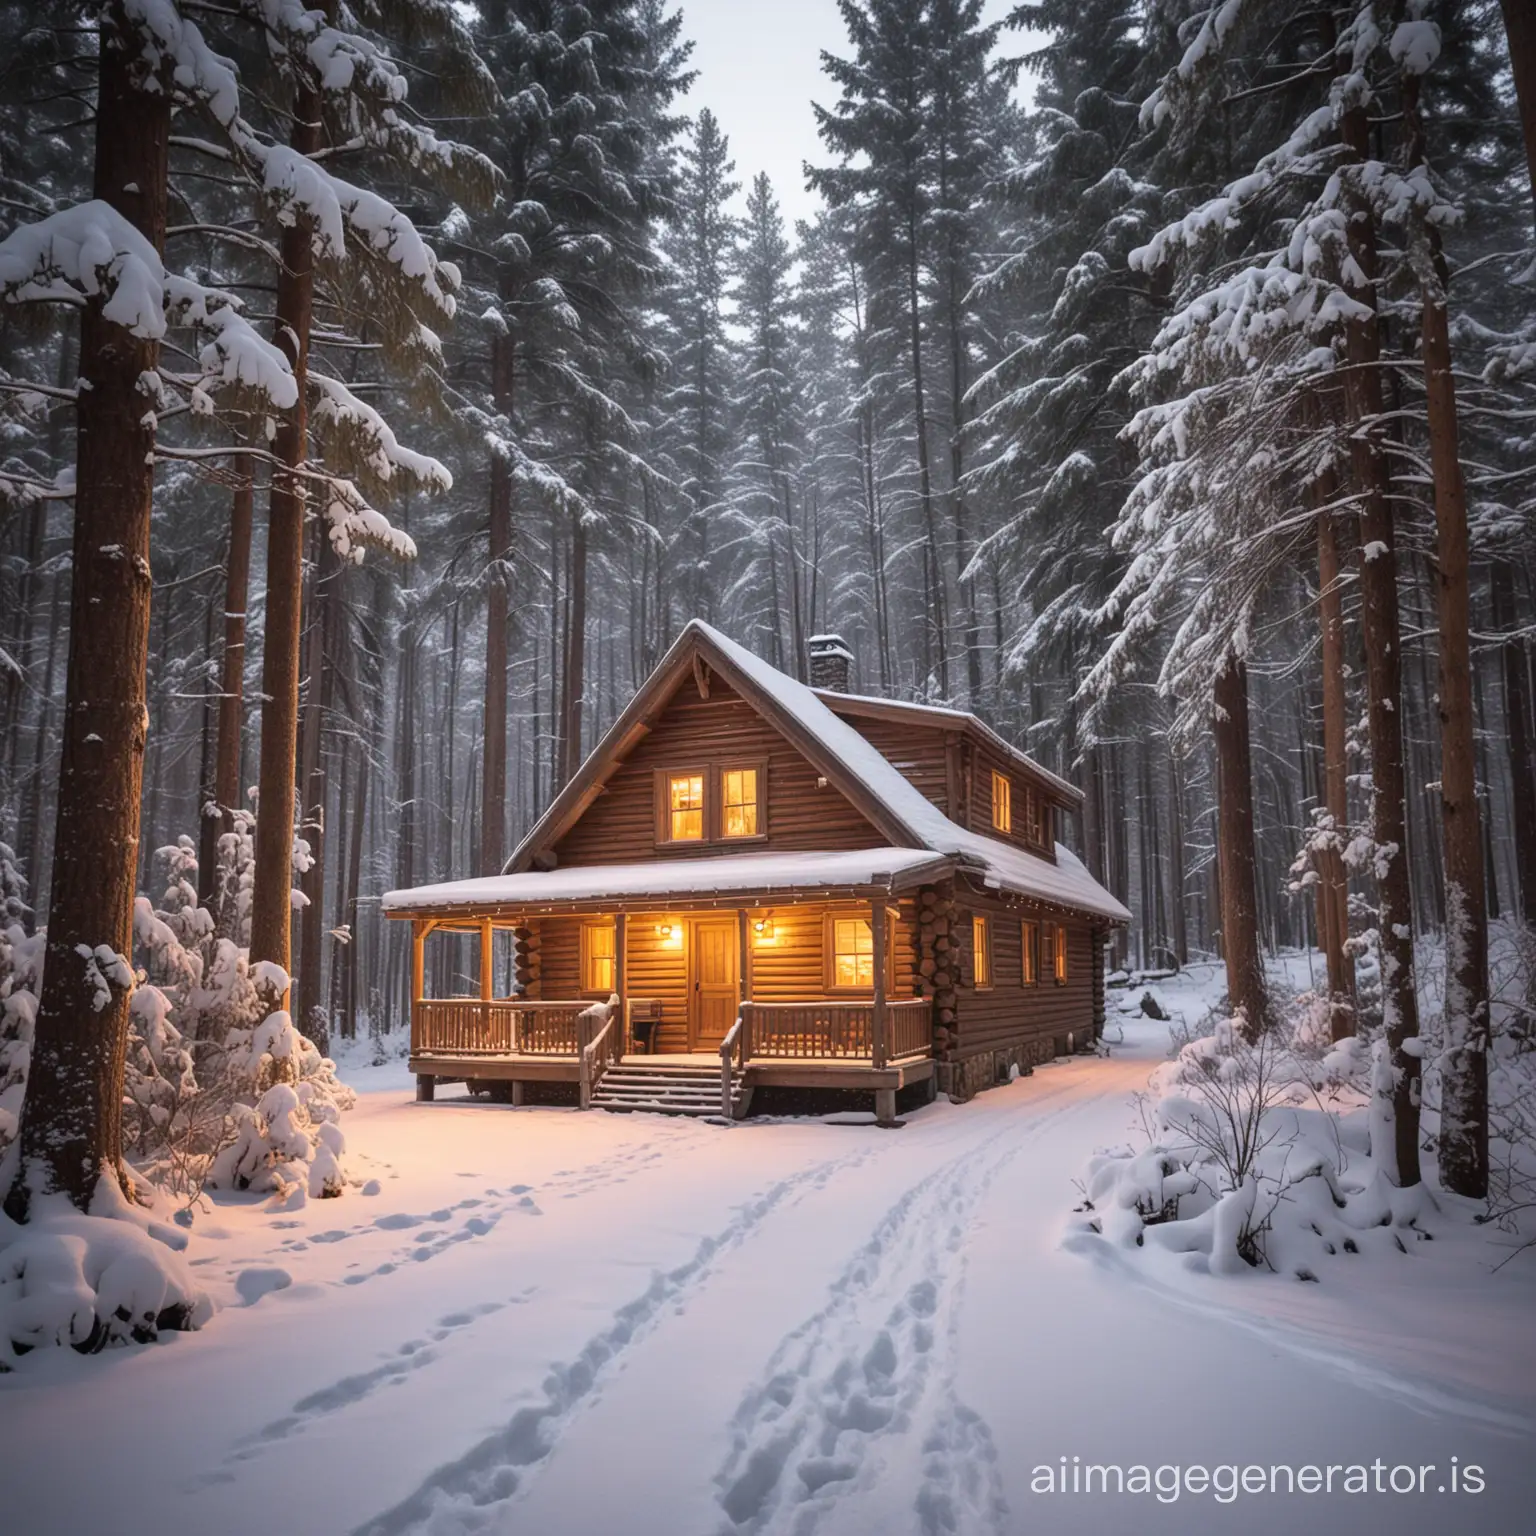 Cozy-Log-Cabin-Retreat-in-a-Snowy-Forest